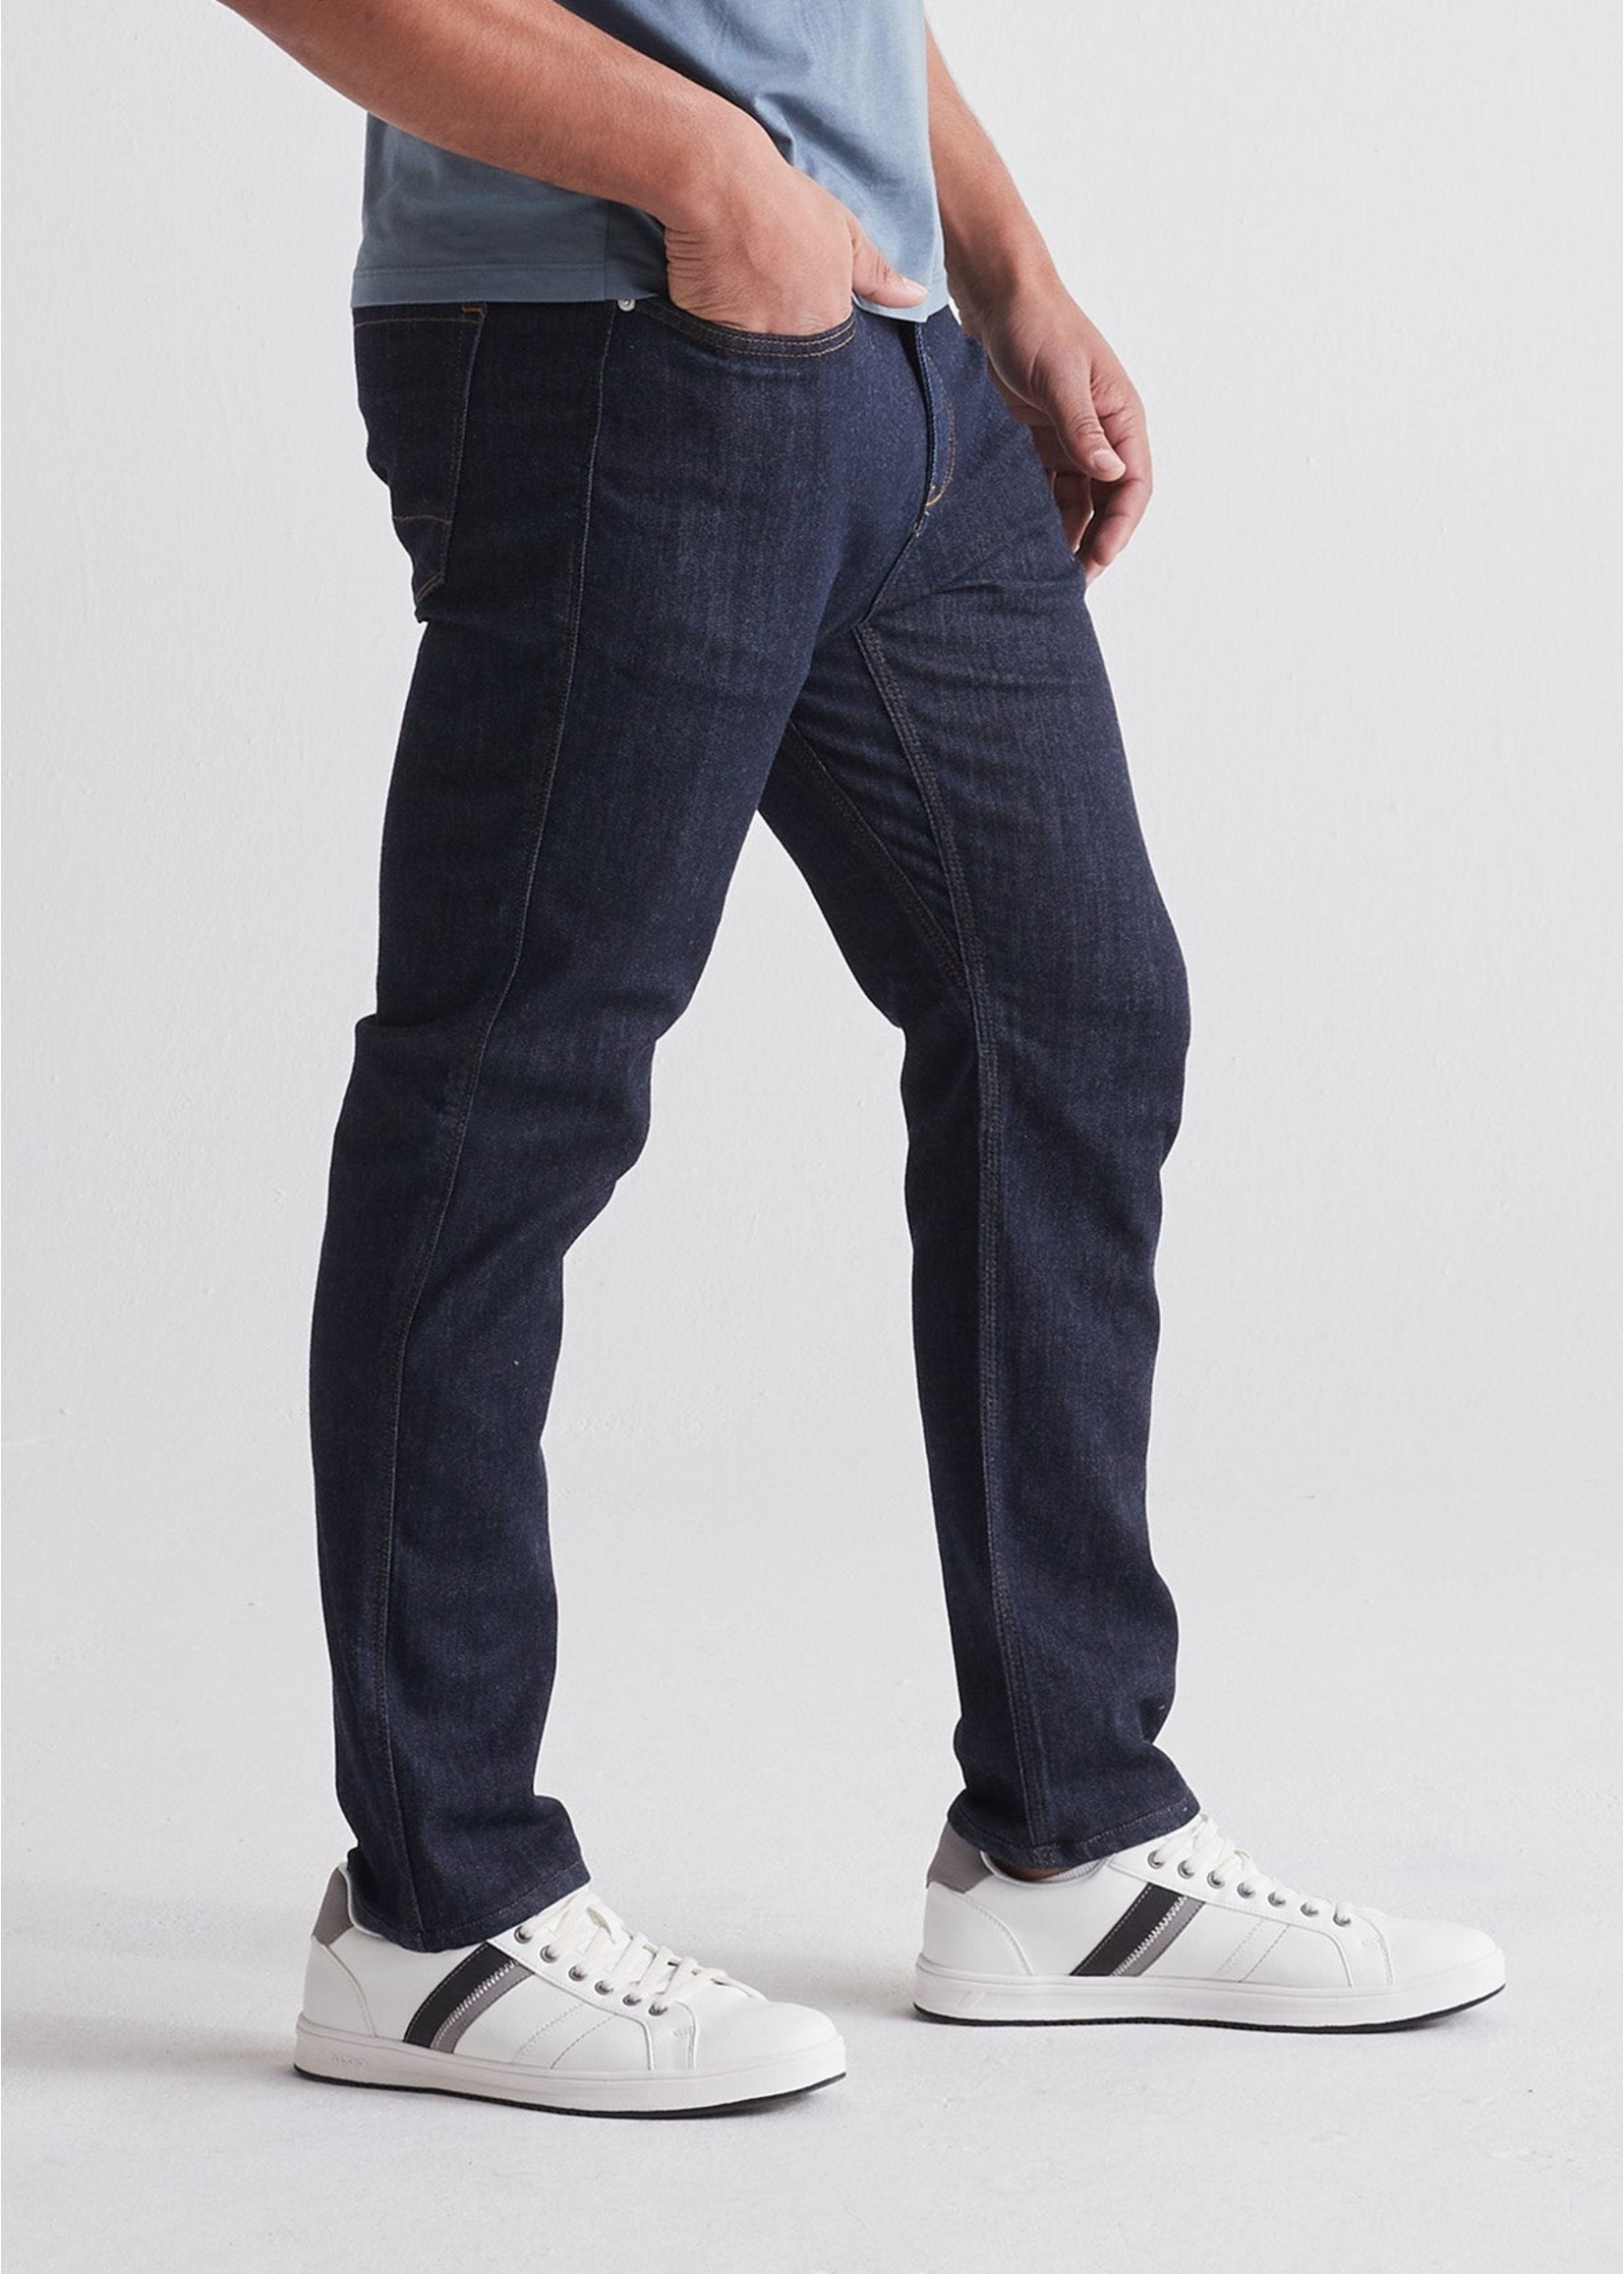 DUER Jeans Performance Denim Relaxed Taper par Duer-Homme